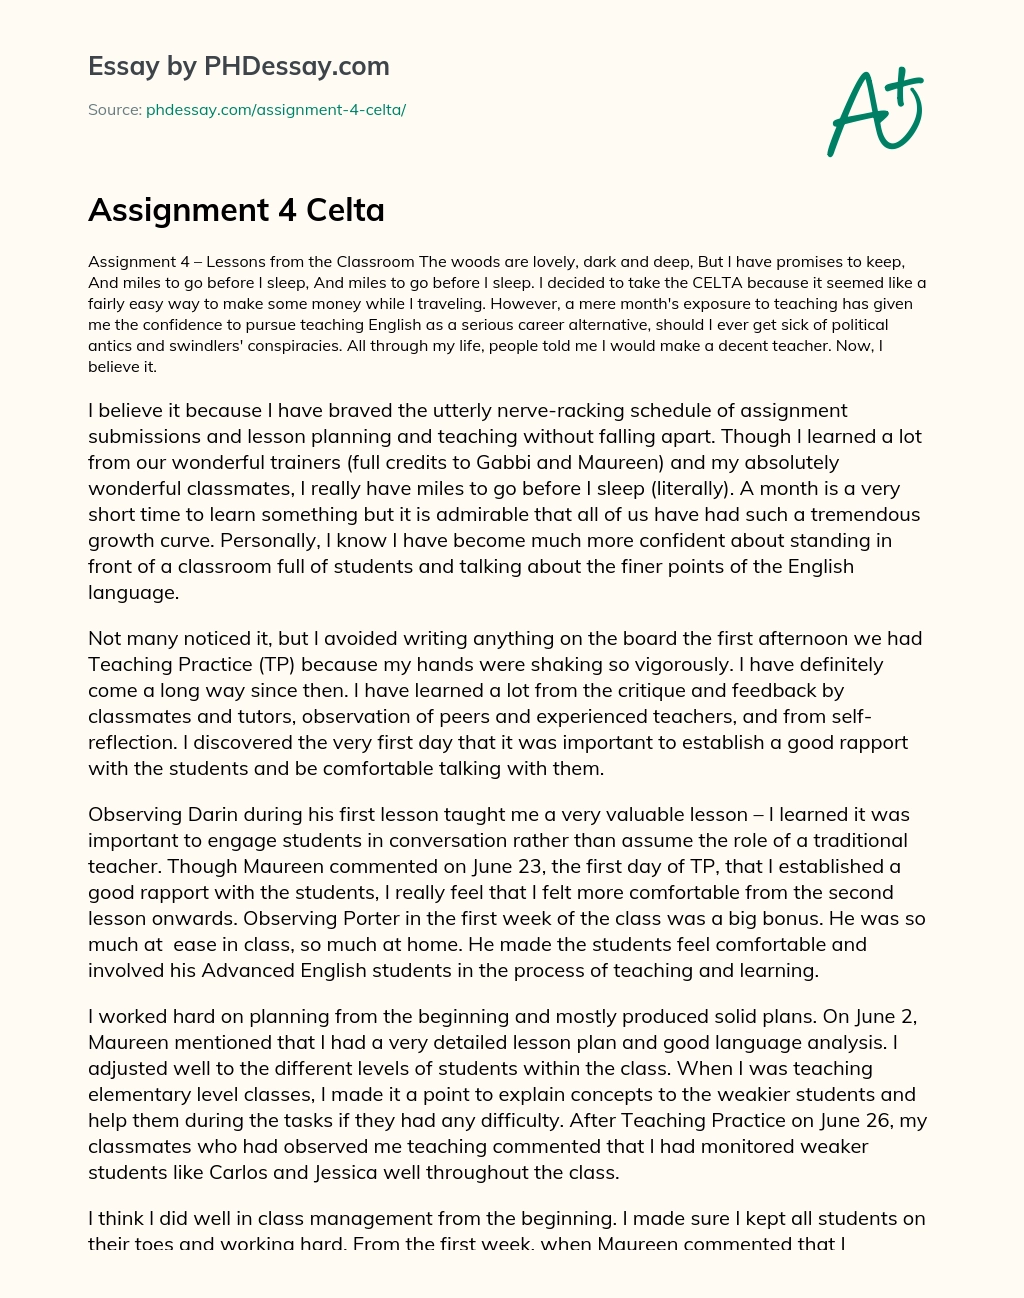 Assignment 4 Celta essay